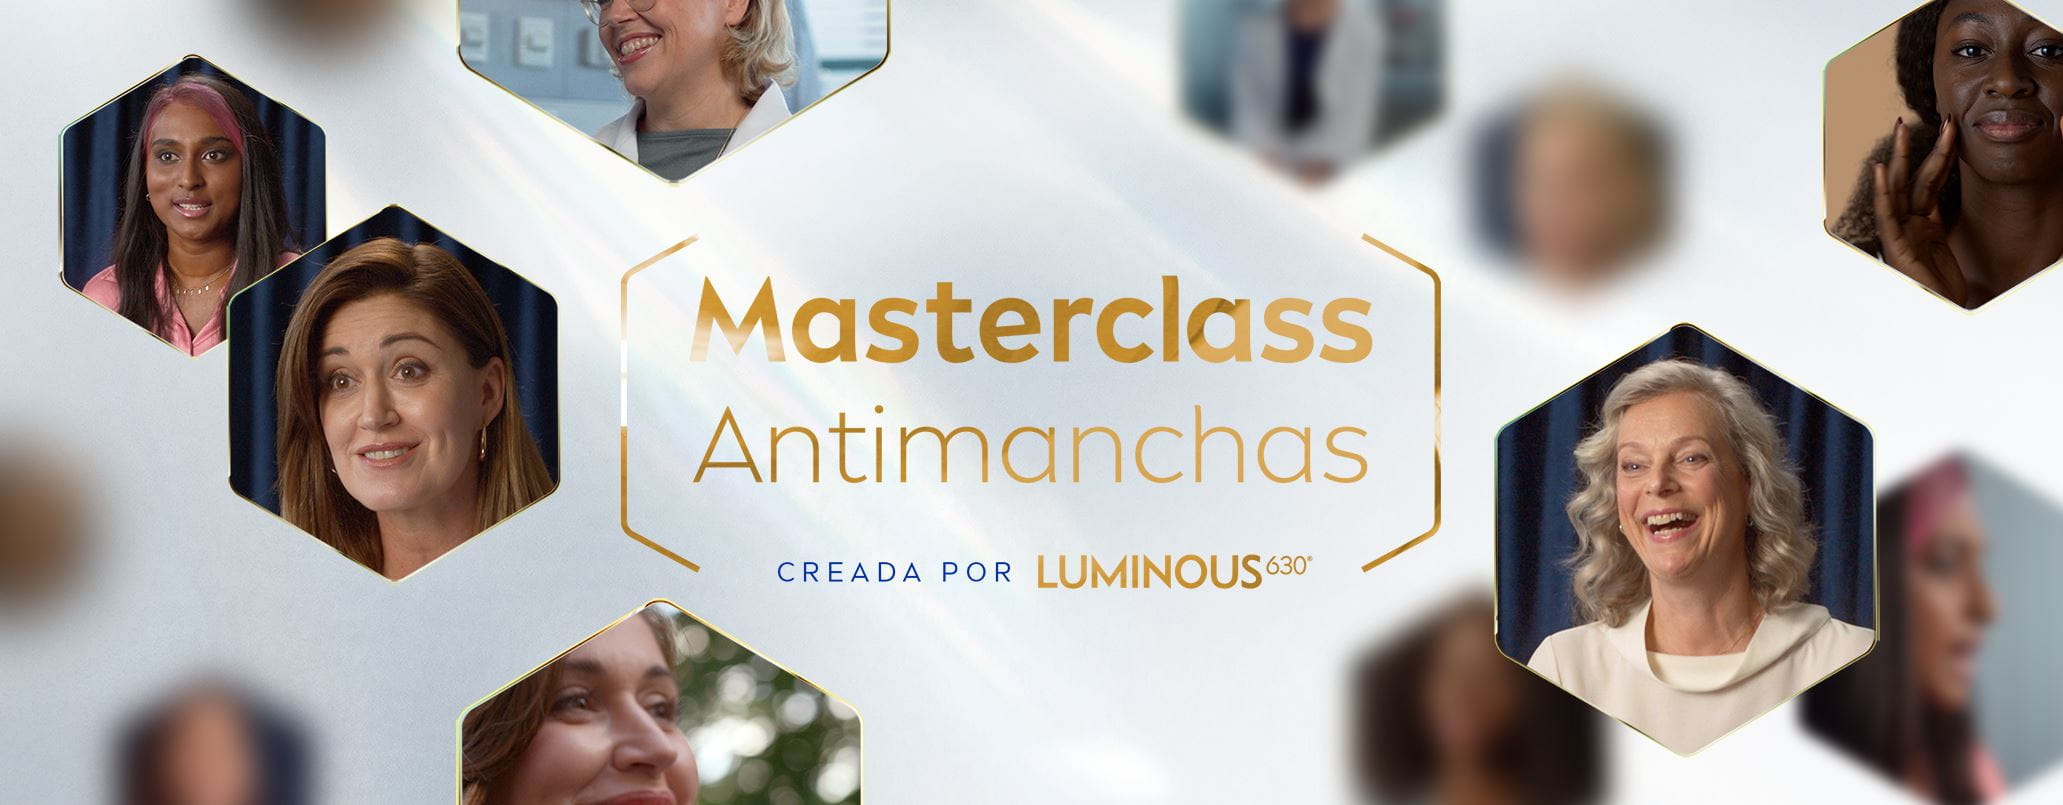 Masterclass Antimanchas creada por Luminous630